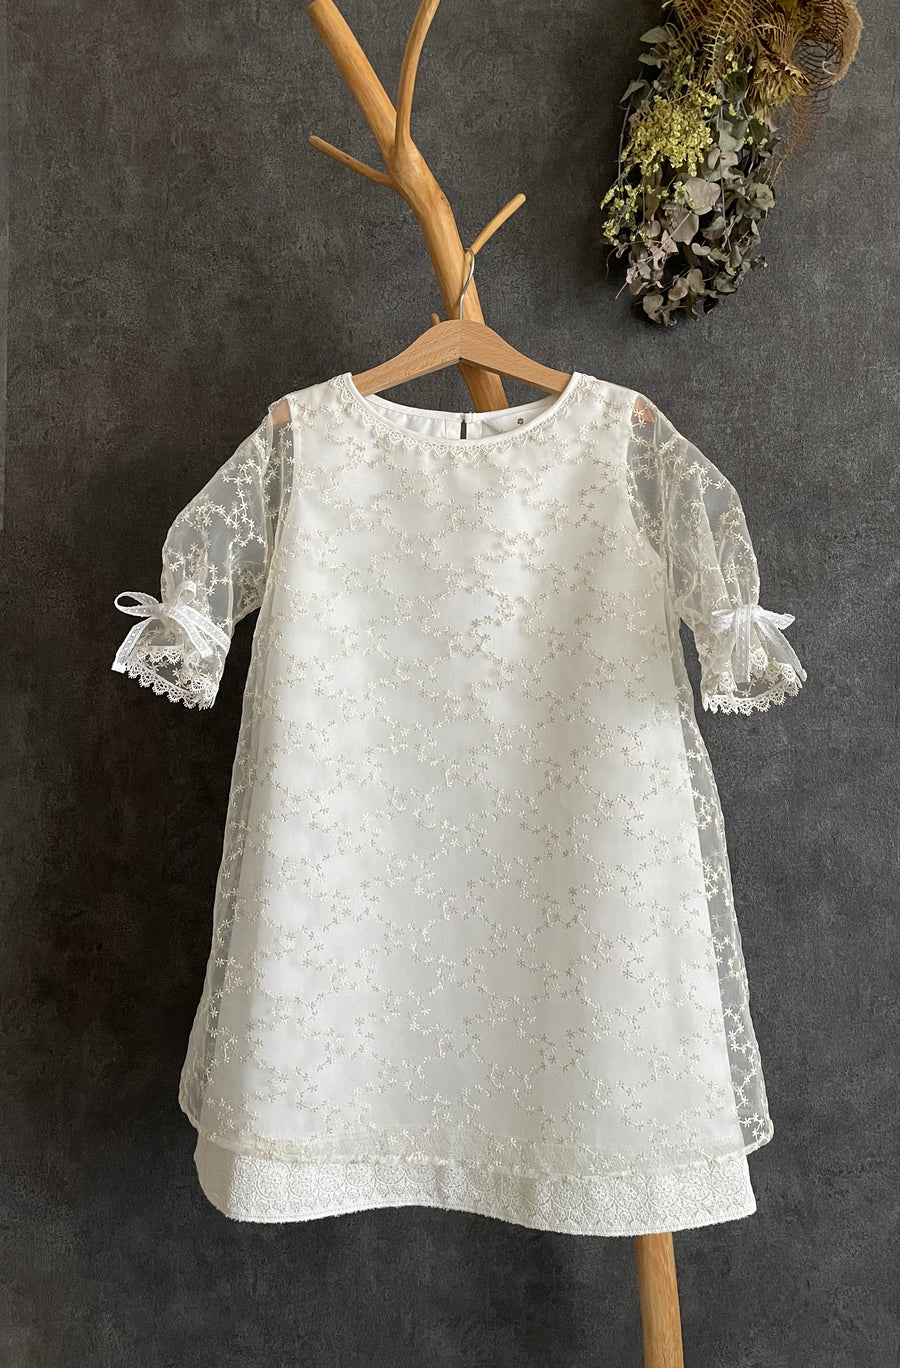 Organdy lace dress